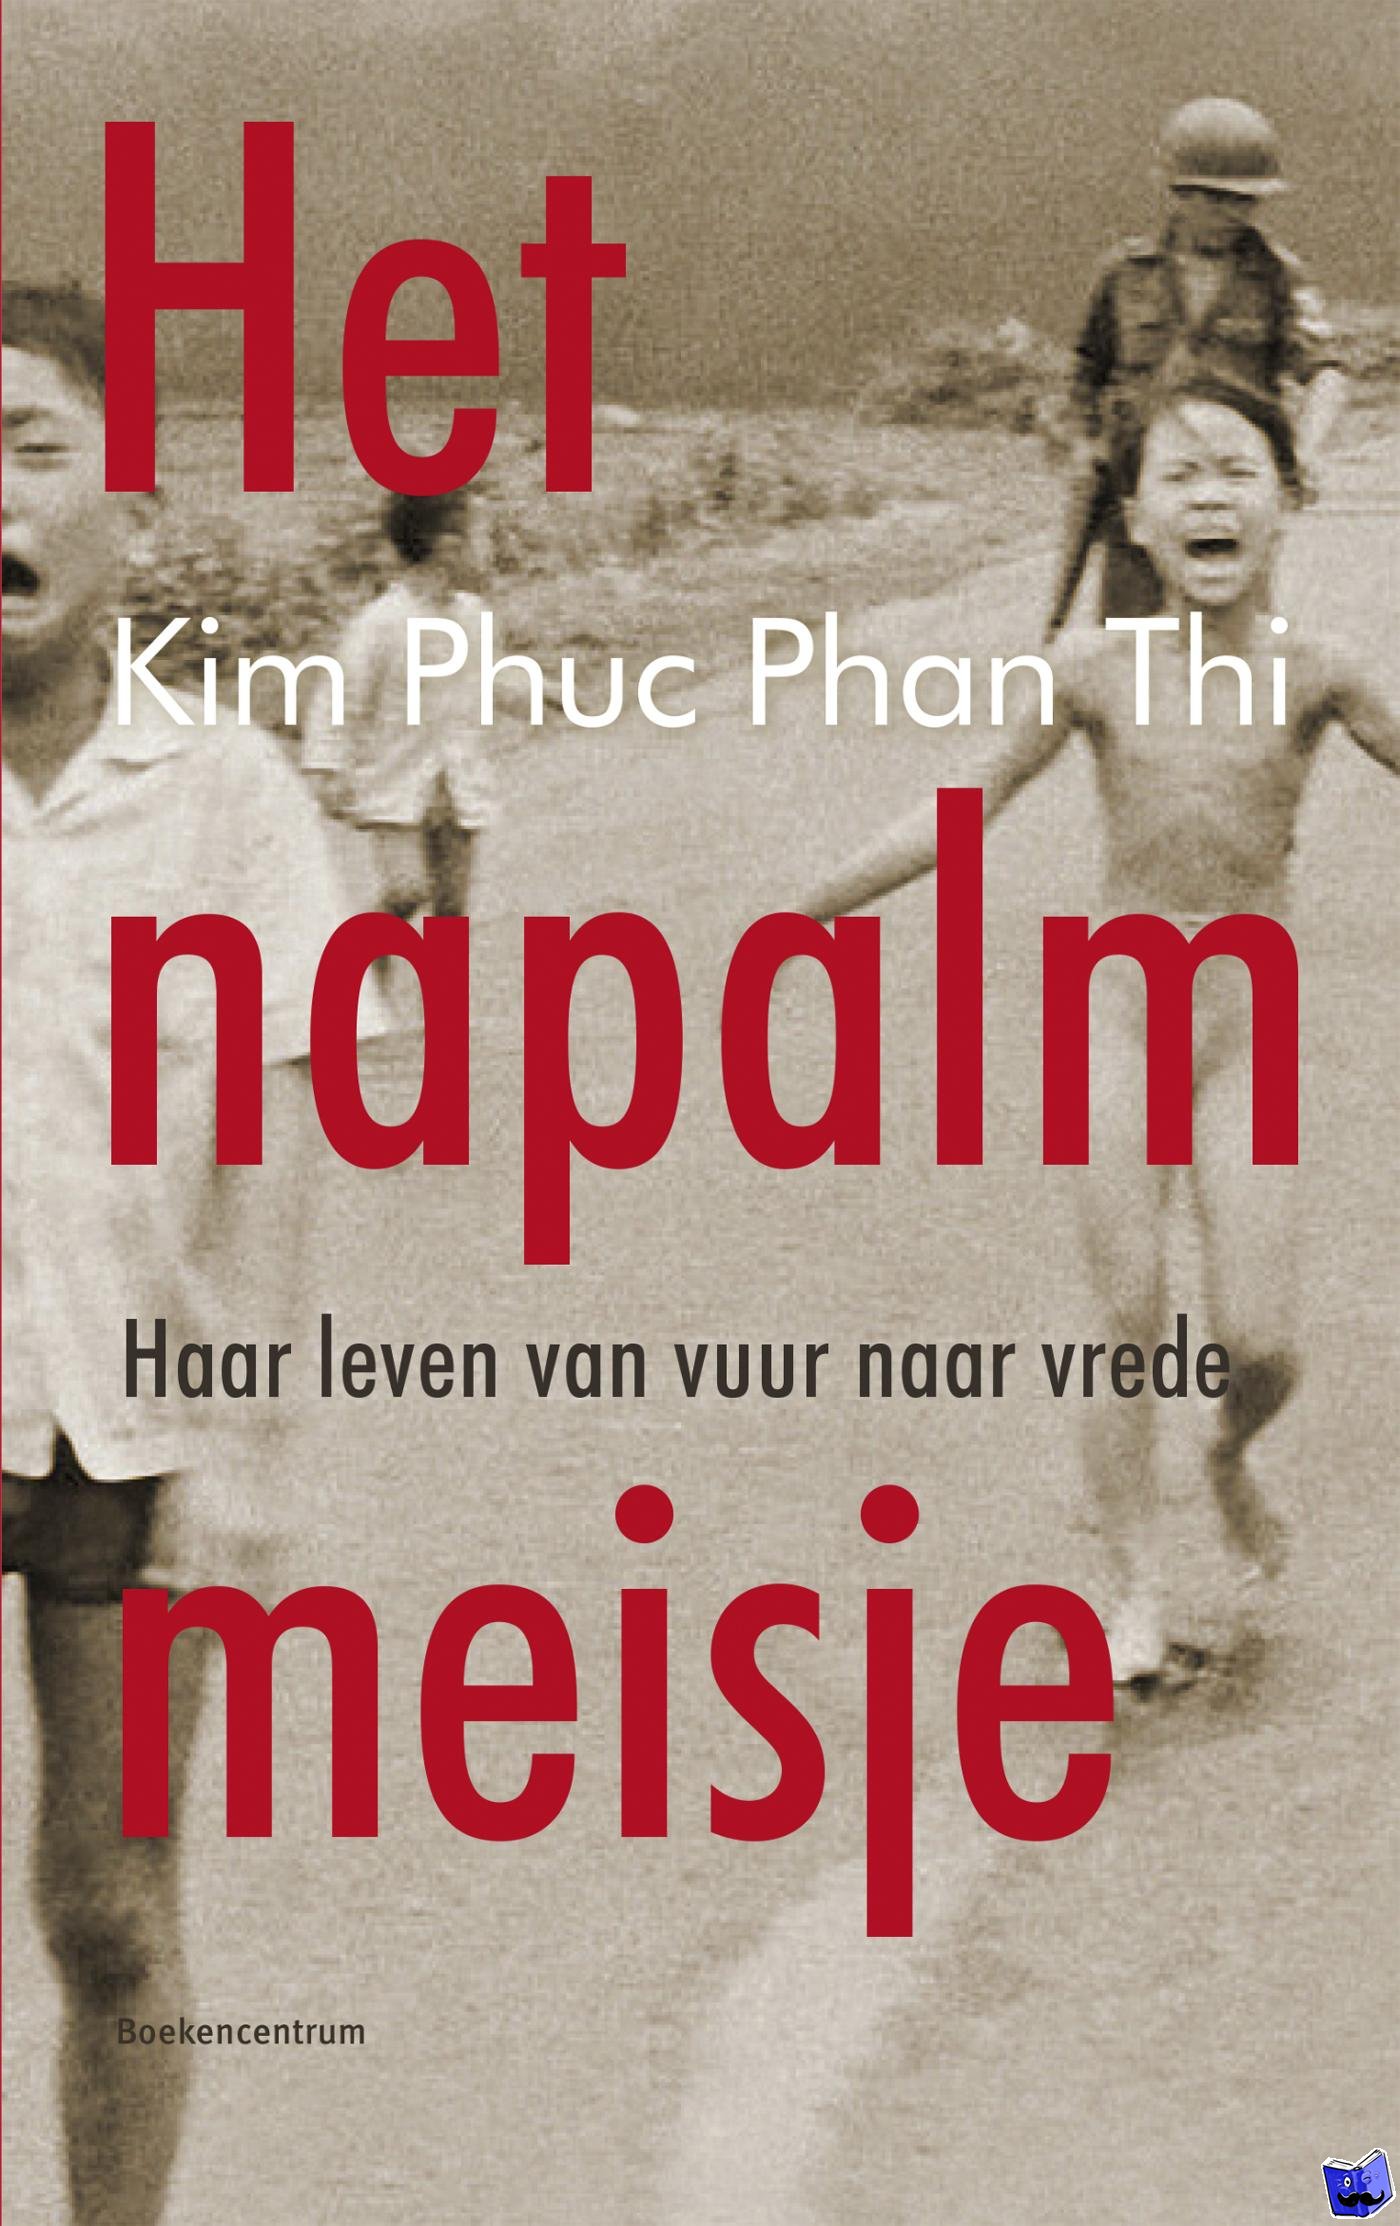 Phuc Phan Thi, Kim - Het napalmmeisje